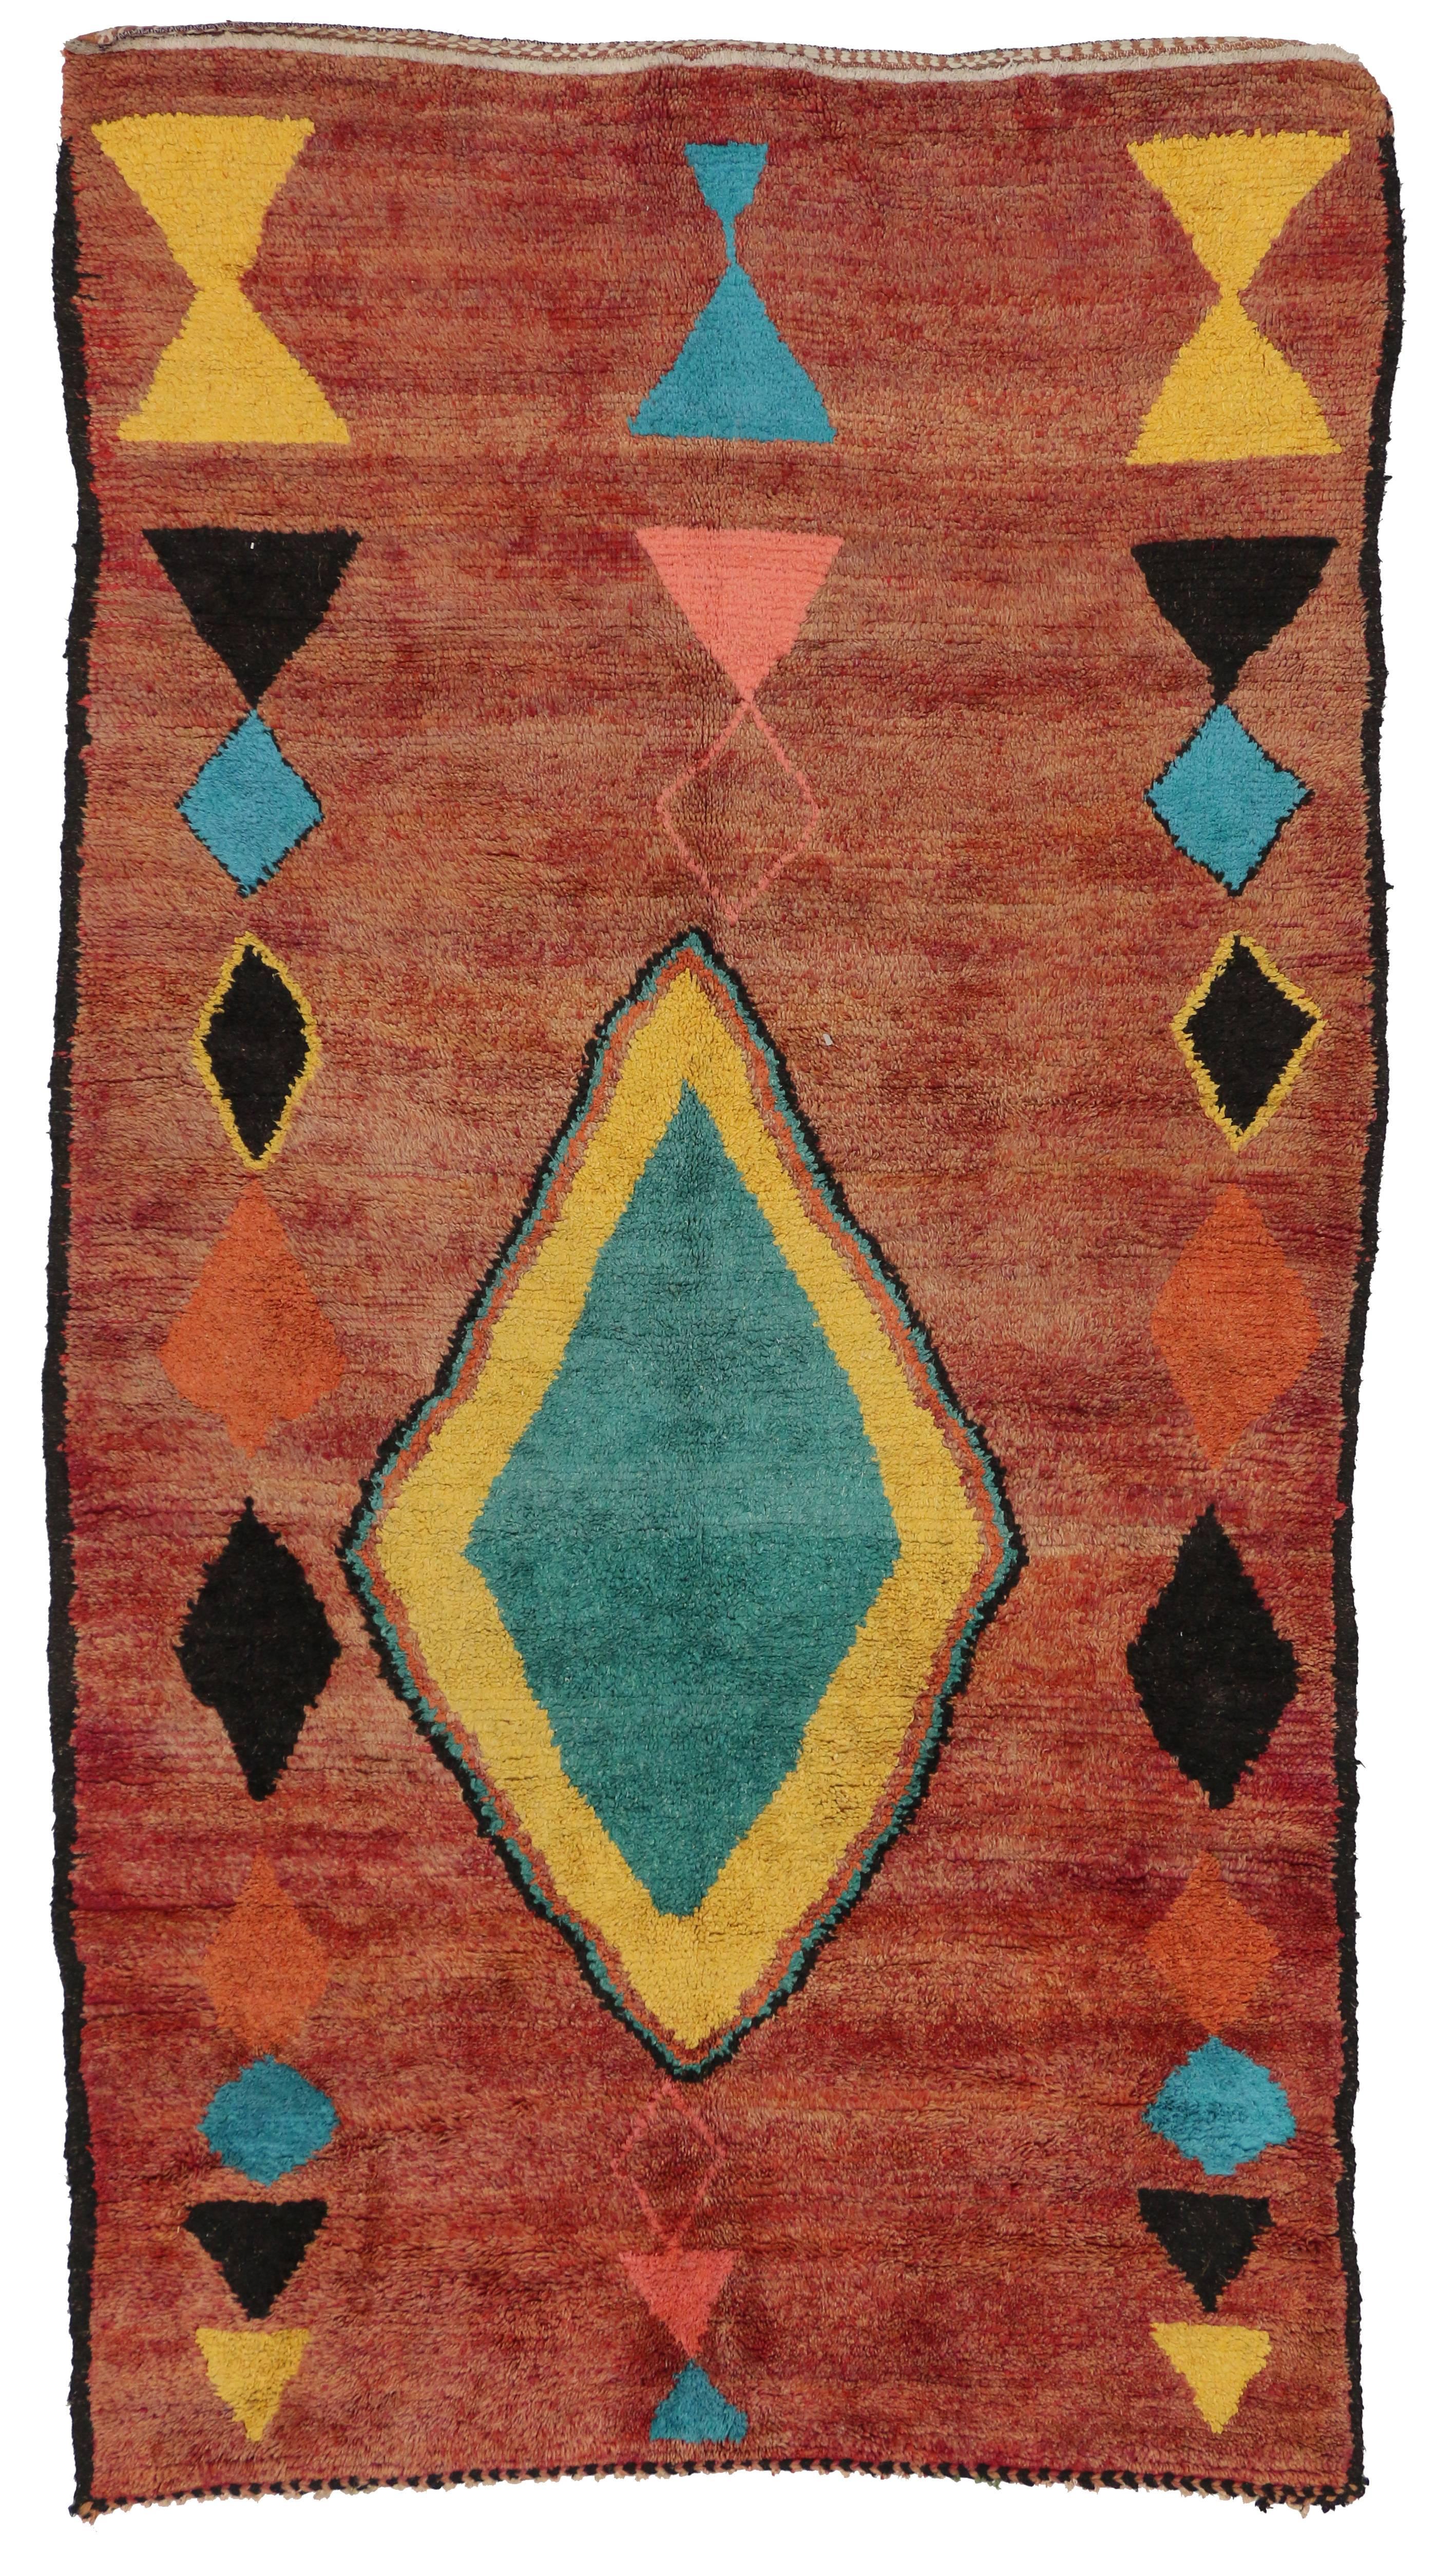 Wool Vintage Berber Moroccan Rug with Modern Tribal Style